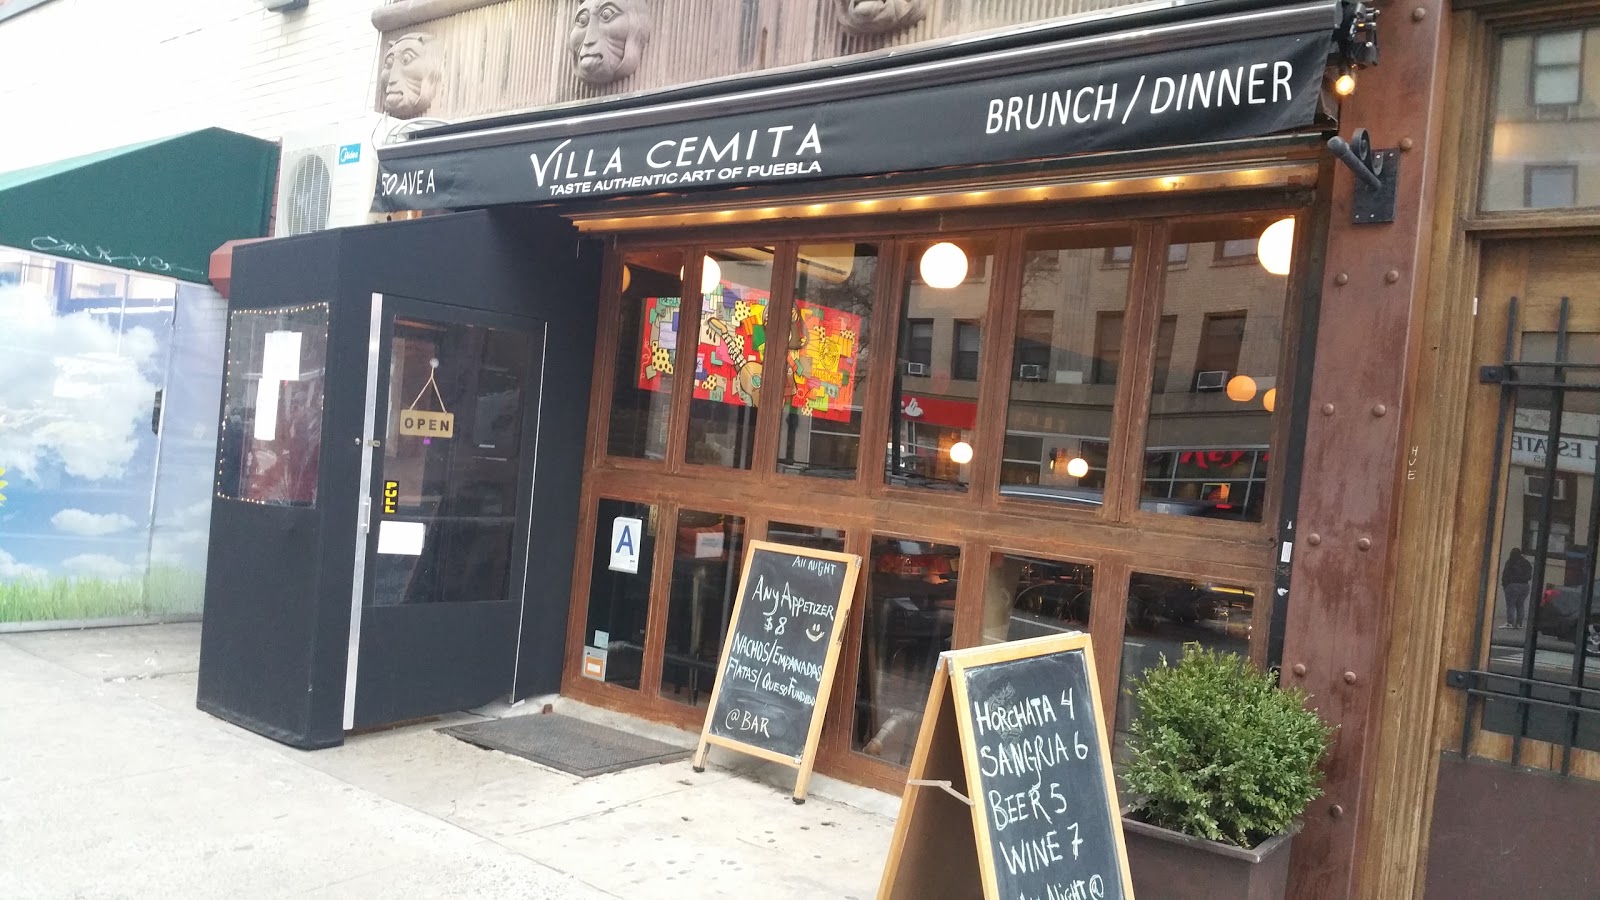 Photo of Villa Cemita in New York City, New York, United States - 2 Picture of Restaurant, Food, Point of interest, Establishment